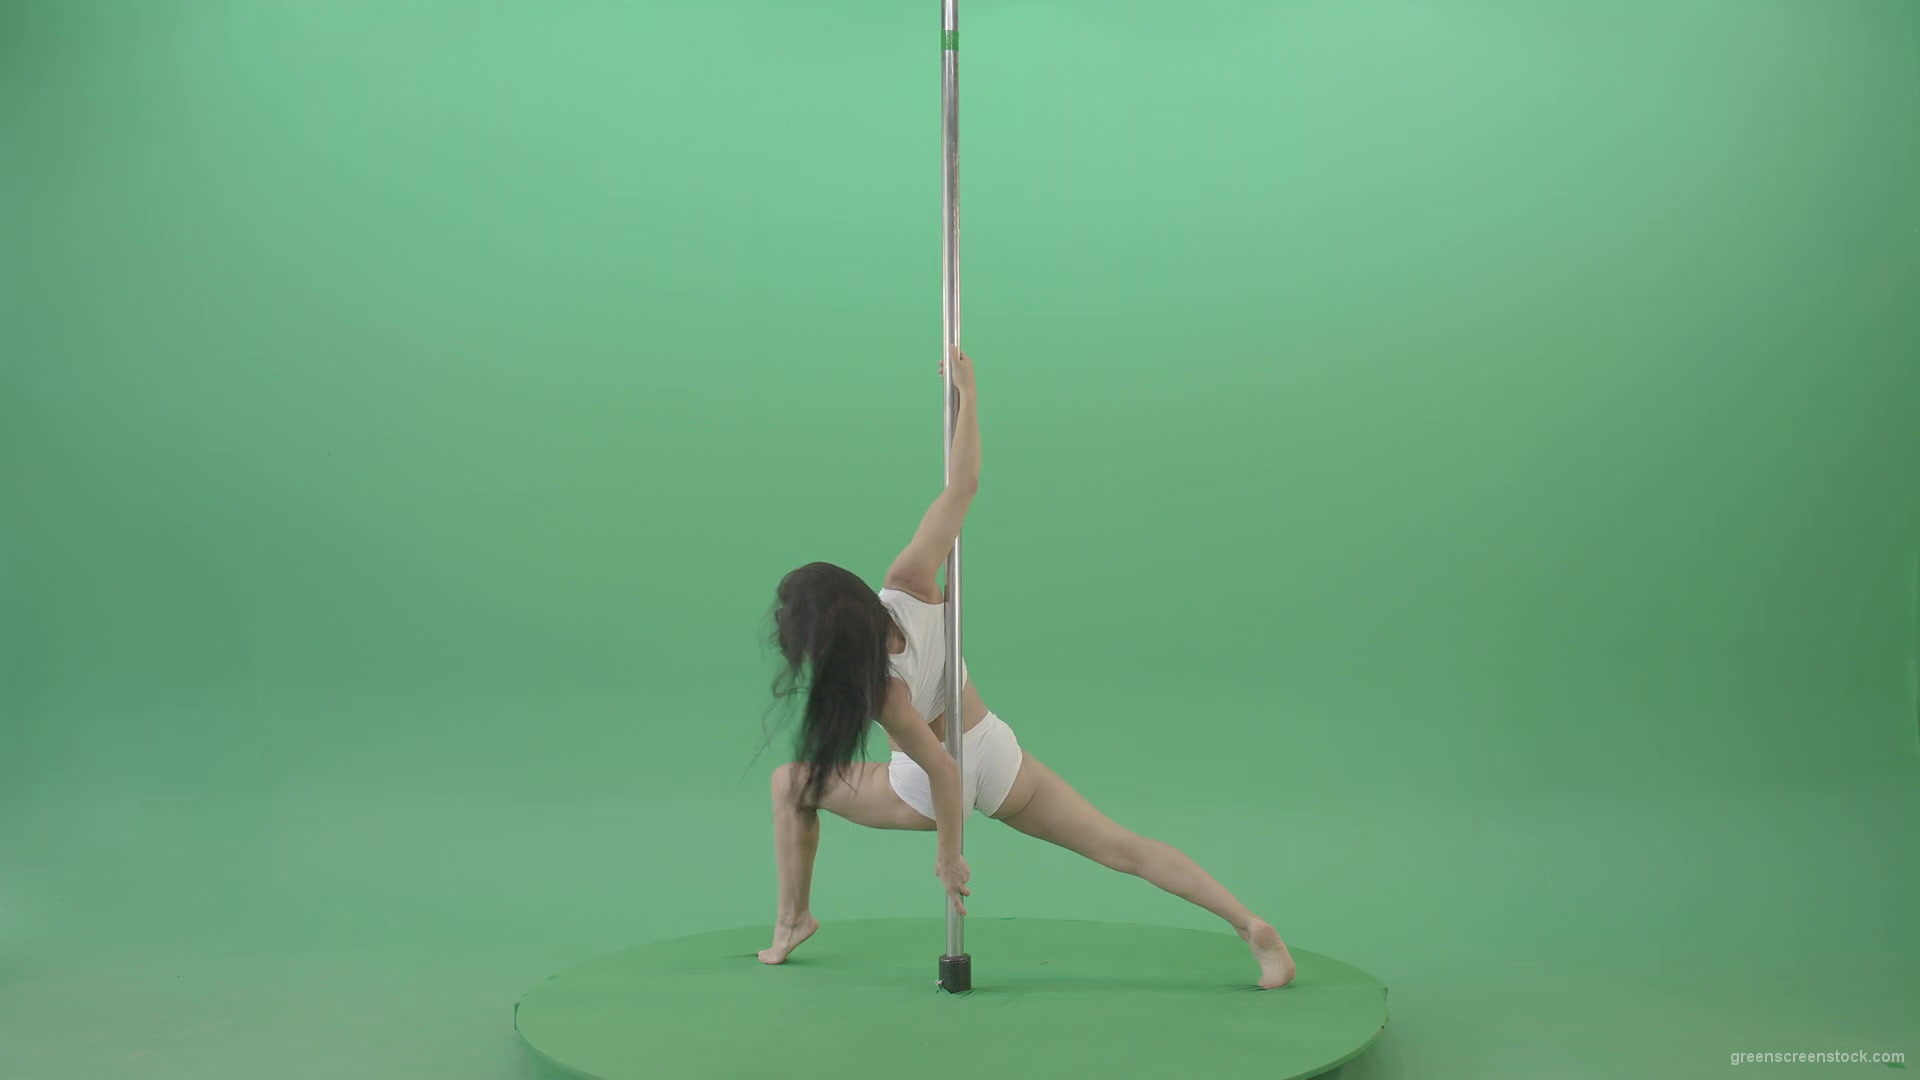 Acrobatic-gymnastics-making-spin-element-on-Pole-Pilon-on-green-screen-4K-Video-Footage-1920_007 Green Screen Stock